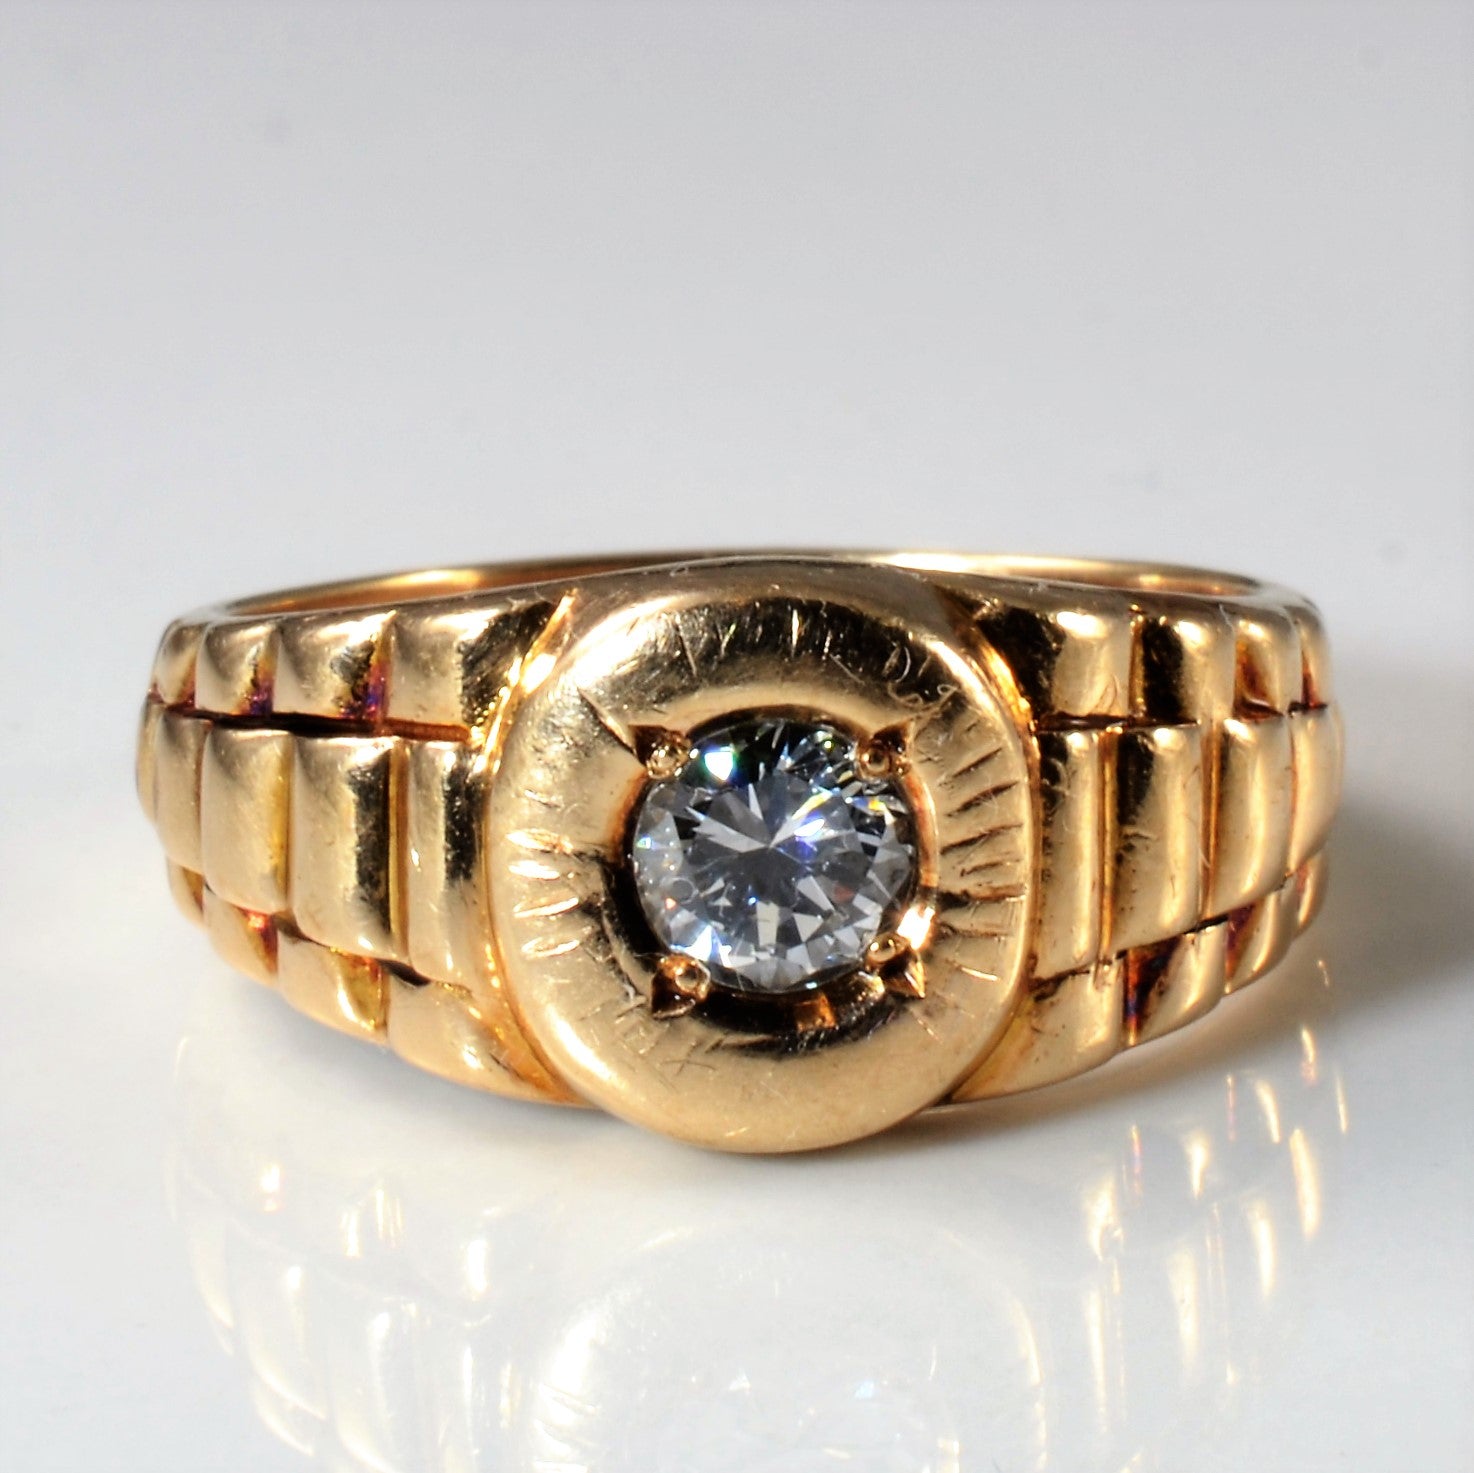 Watch Strap Detailed Diamond Ring | 0.35ct | SZ 7.75 |